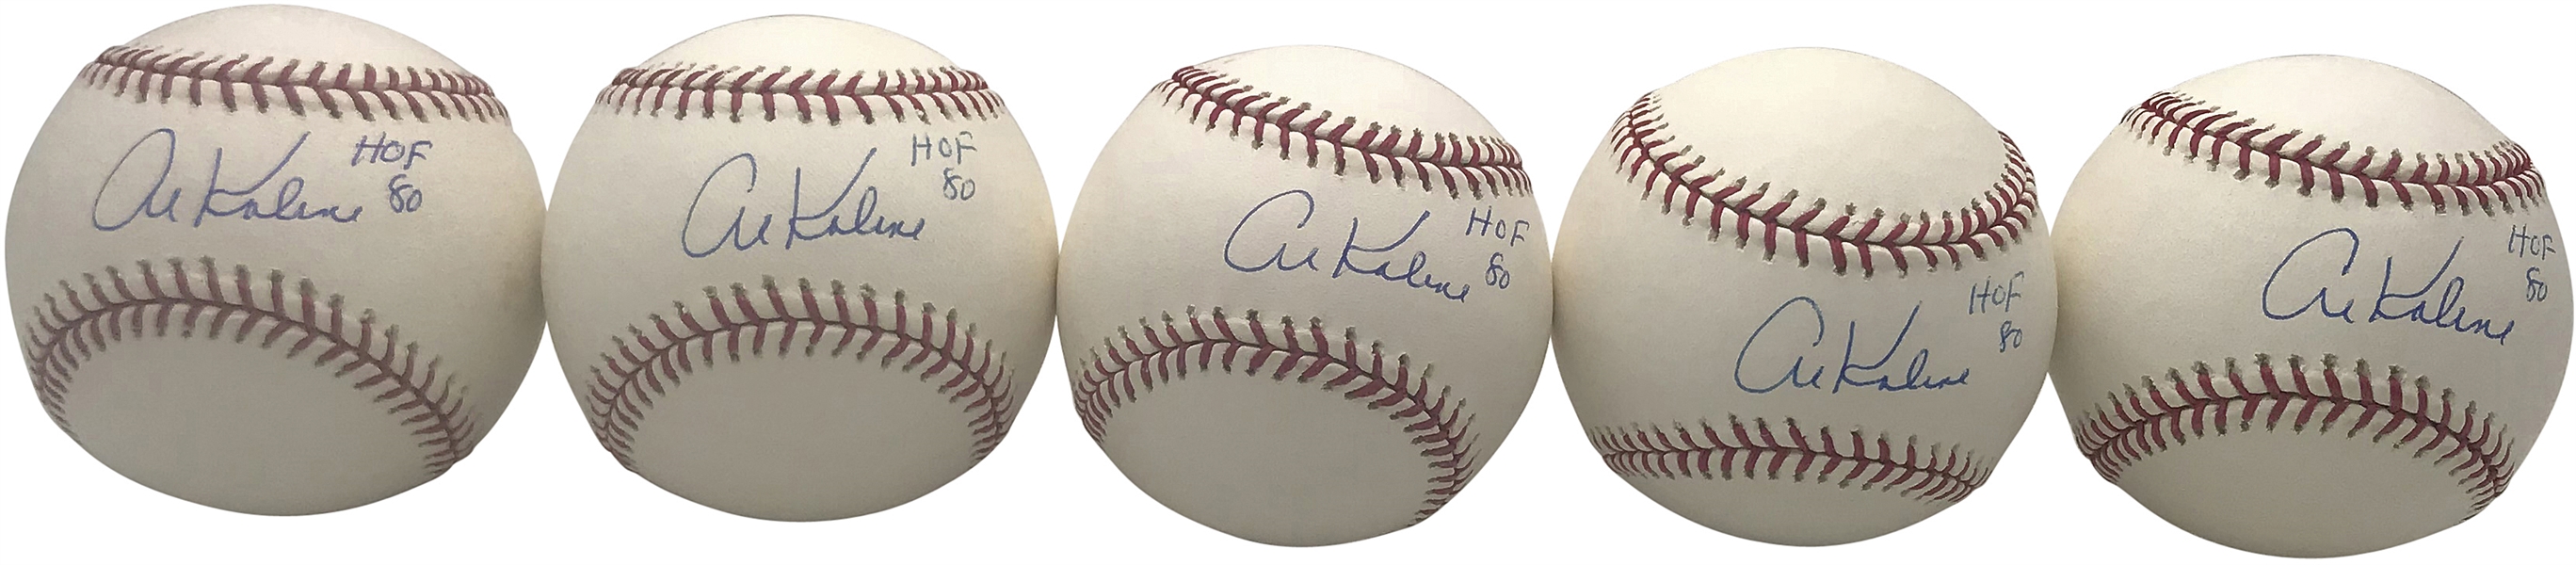 Al Kaline Lot of Five (5) Signed & Inscribed "HOF 80" OML Baseballs (Beckett/BAS Guaranteed)